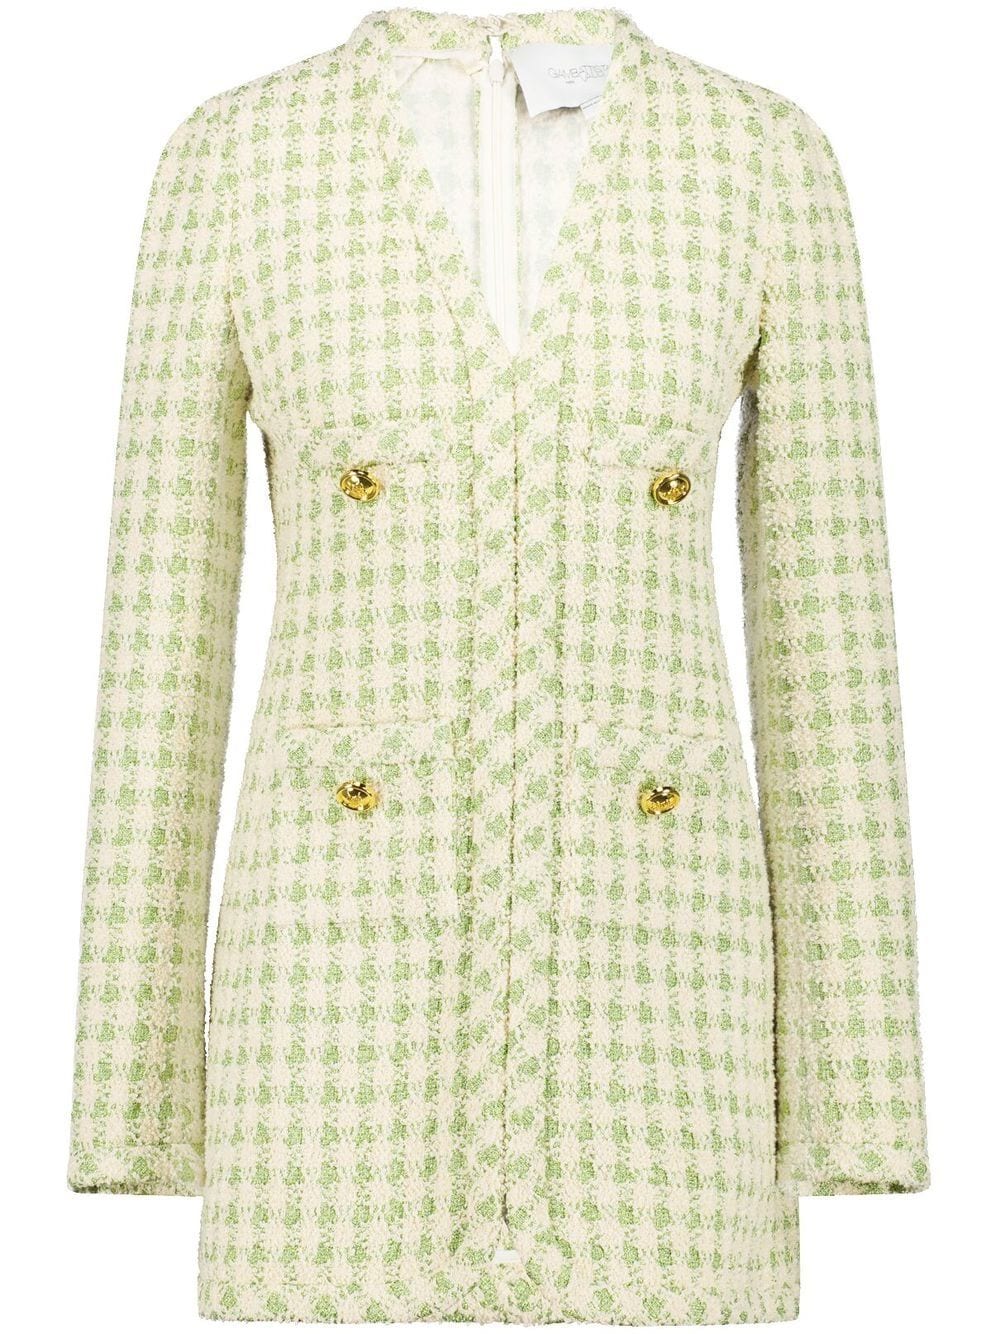 Giambattista Valli check-print tweed blazer dress - Green von Giambattista Valli